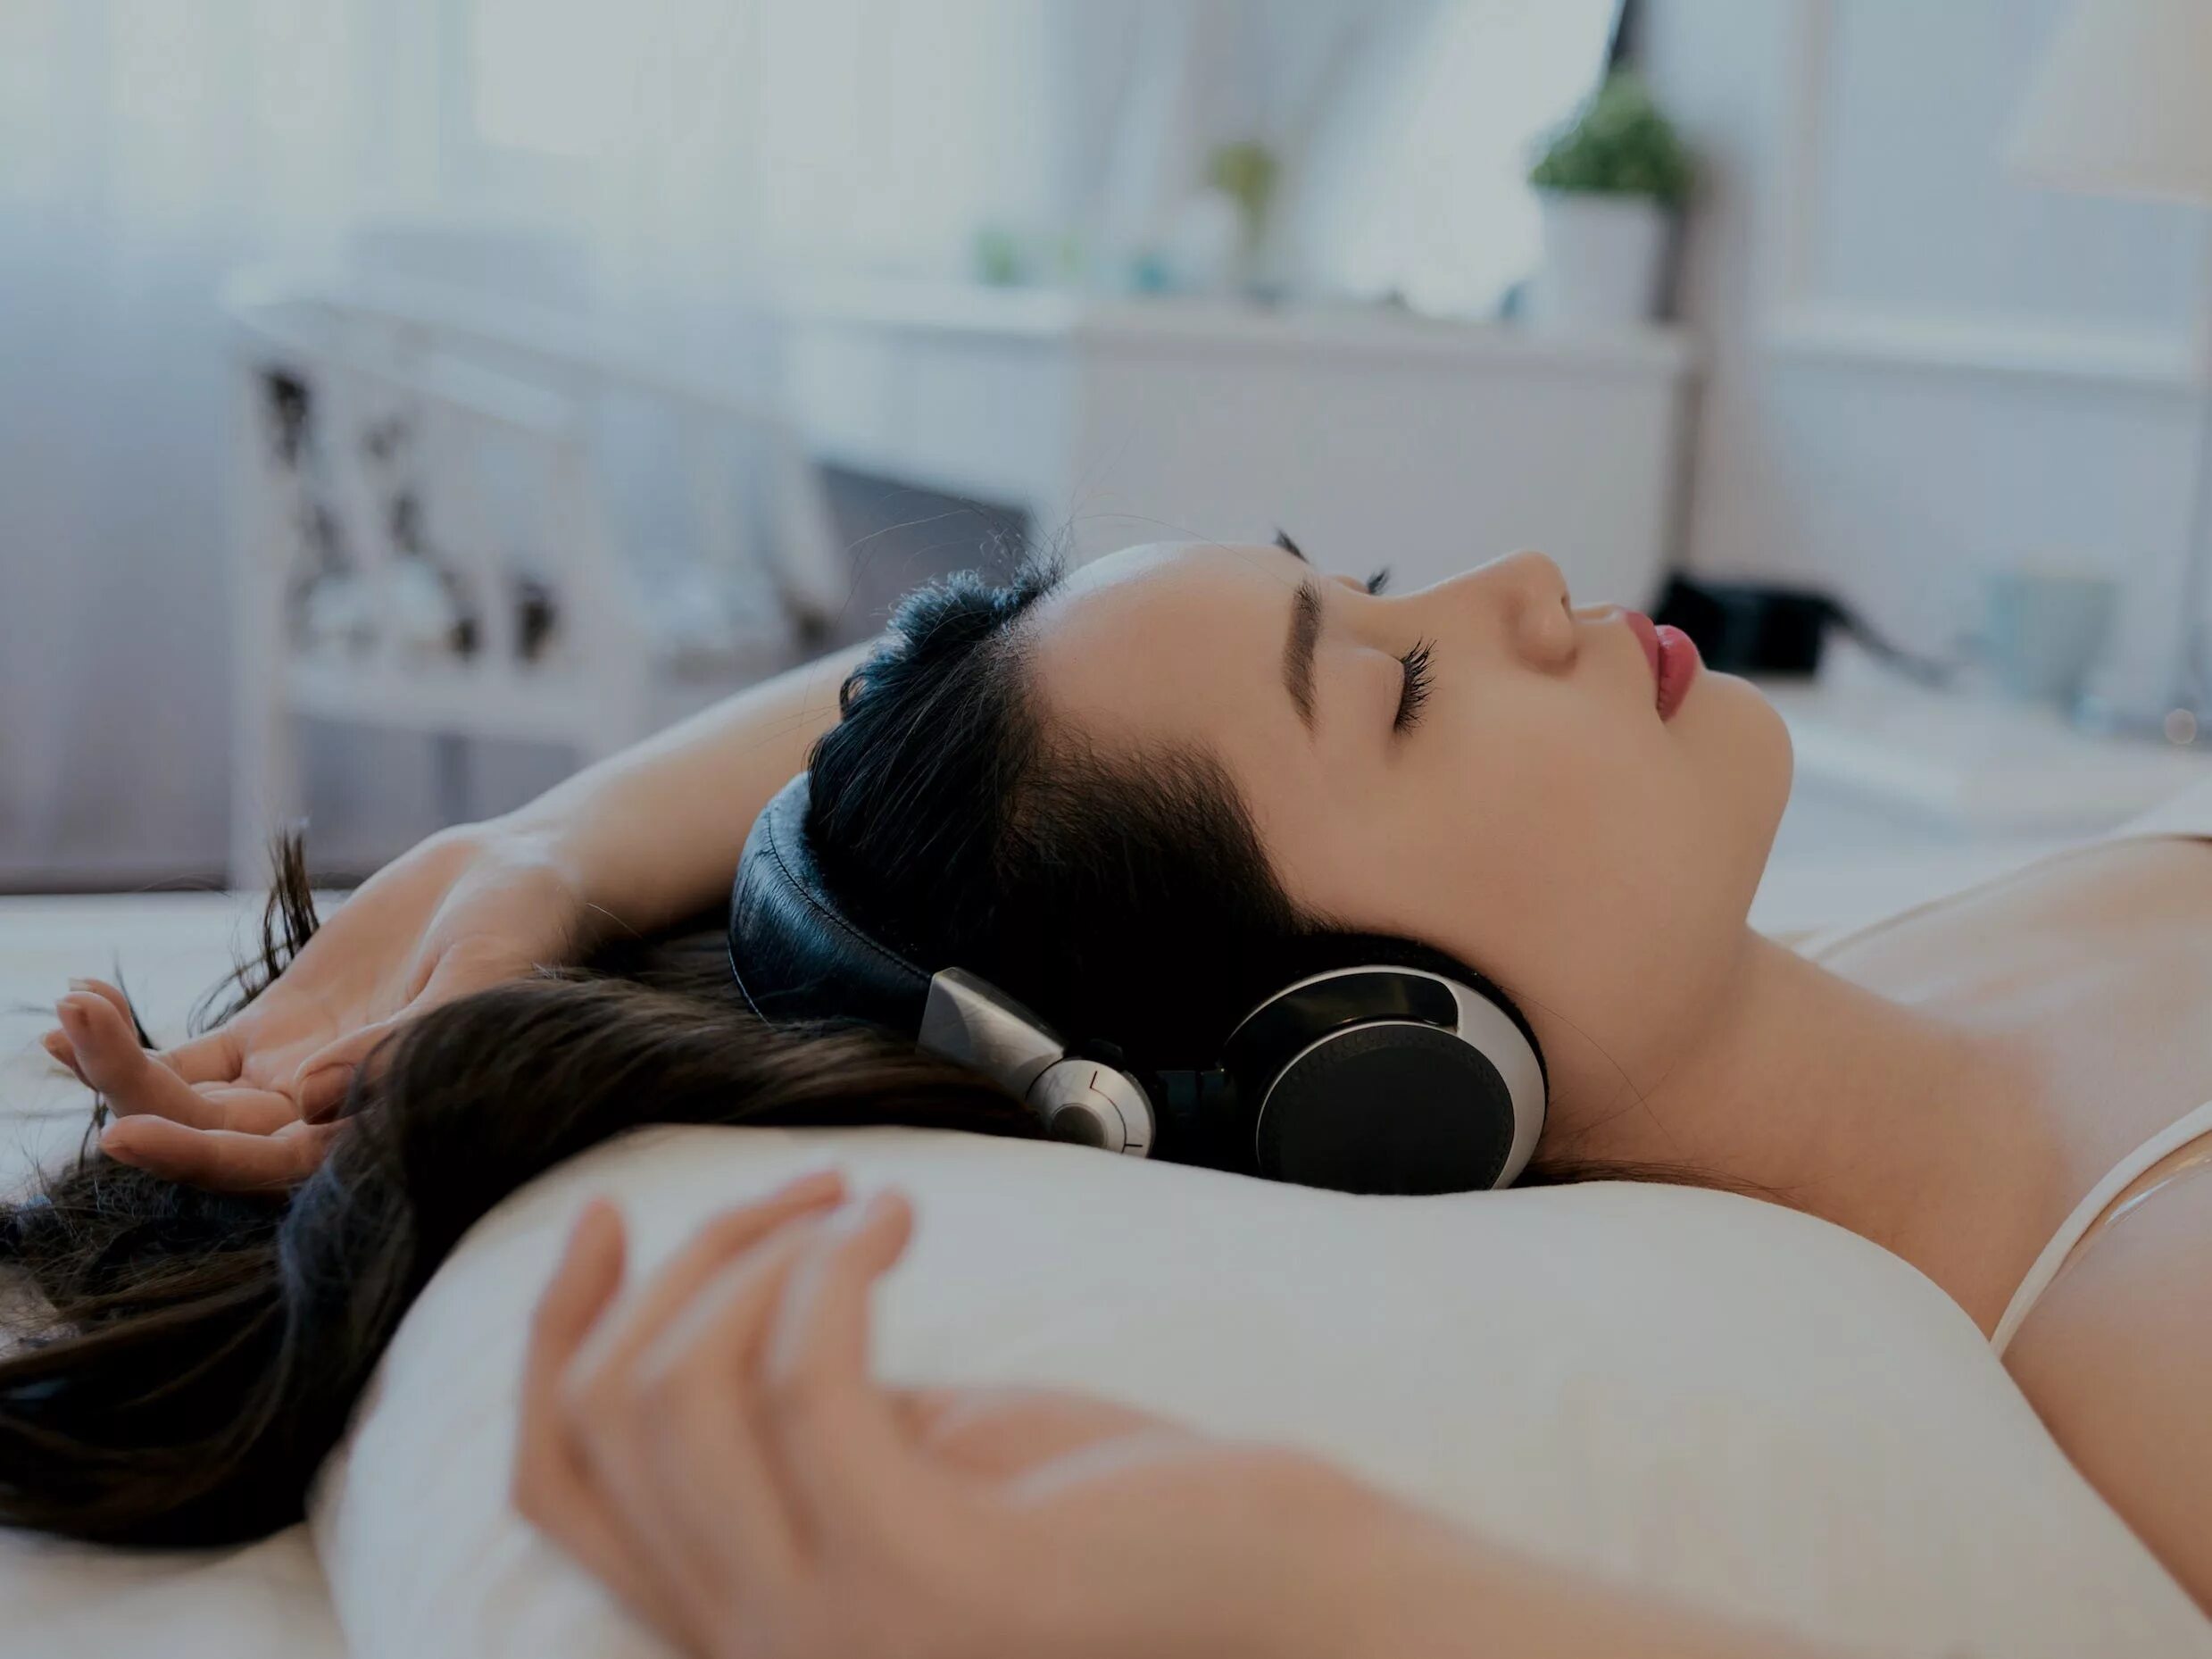 Включи расслабляющуюся. Медитация в кровати. Музыка для сна. Wake up Energy. Wake up Energy фотошоп.